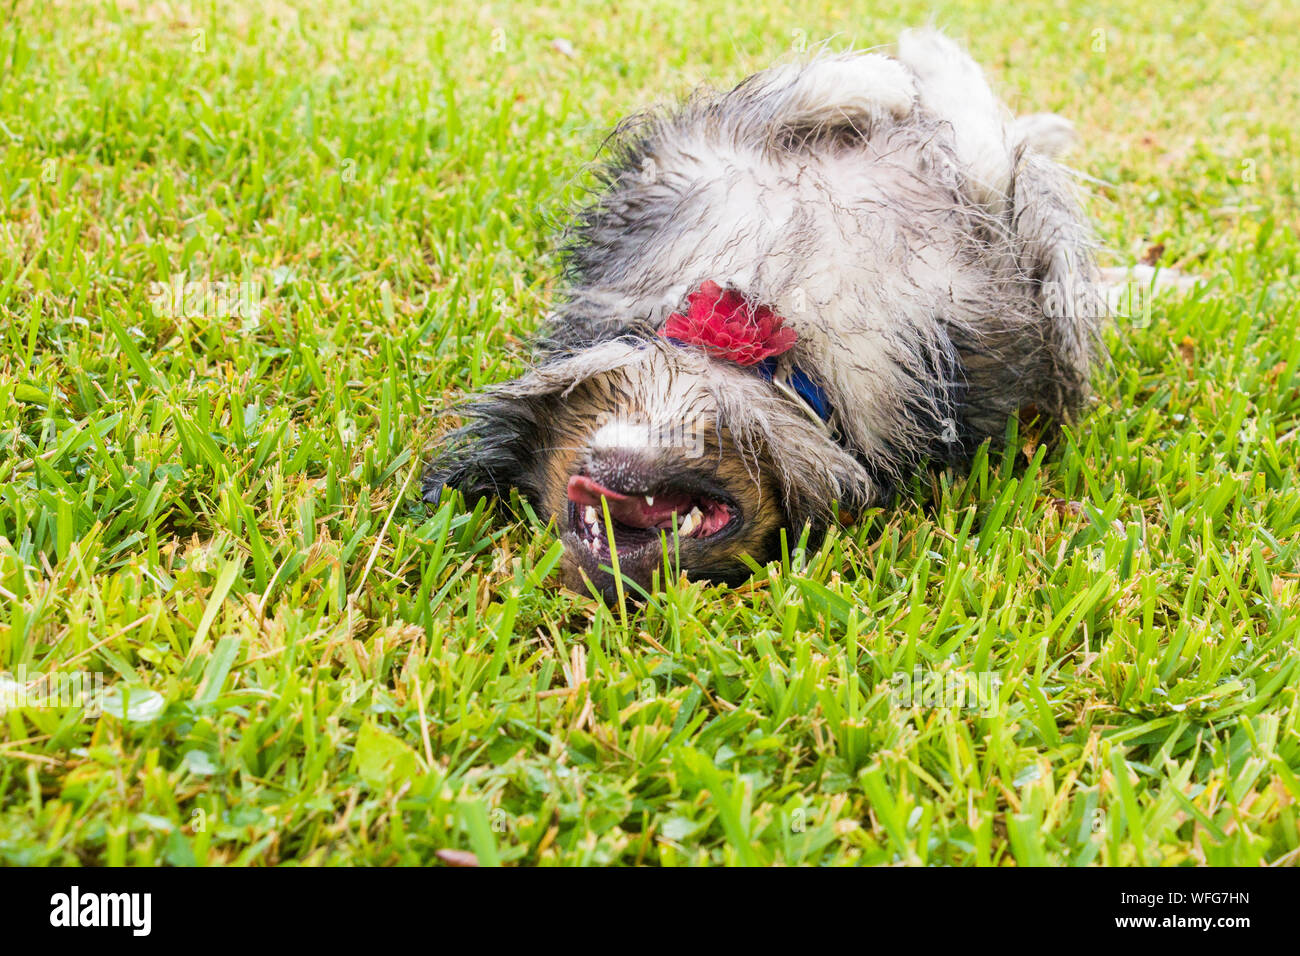 Australian Shepherd dog rolling in the grass, United States Stock Photo